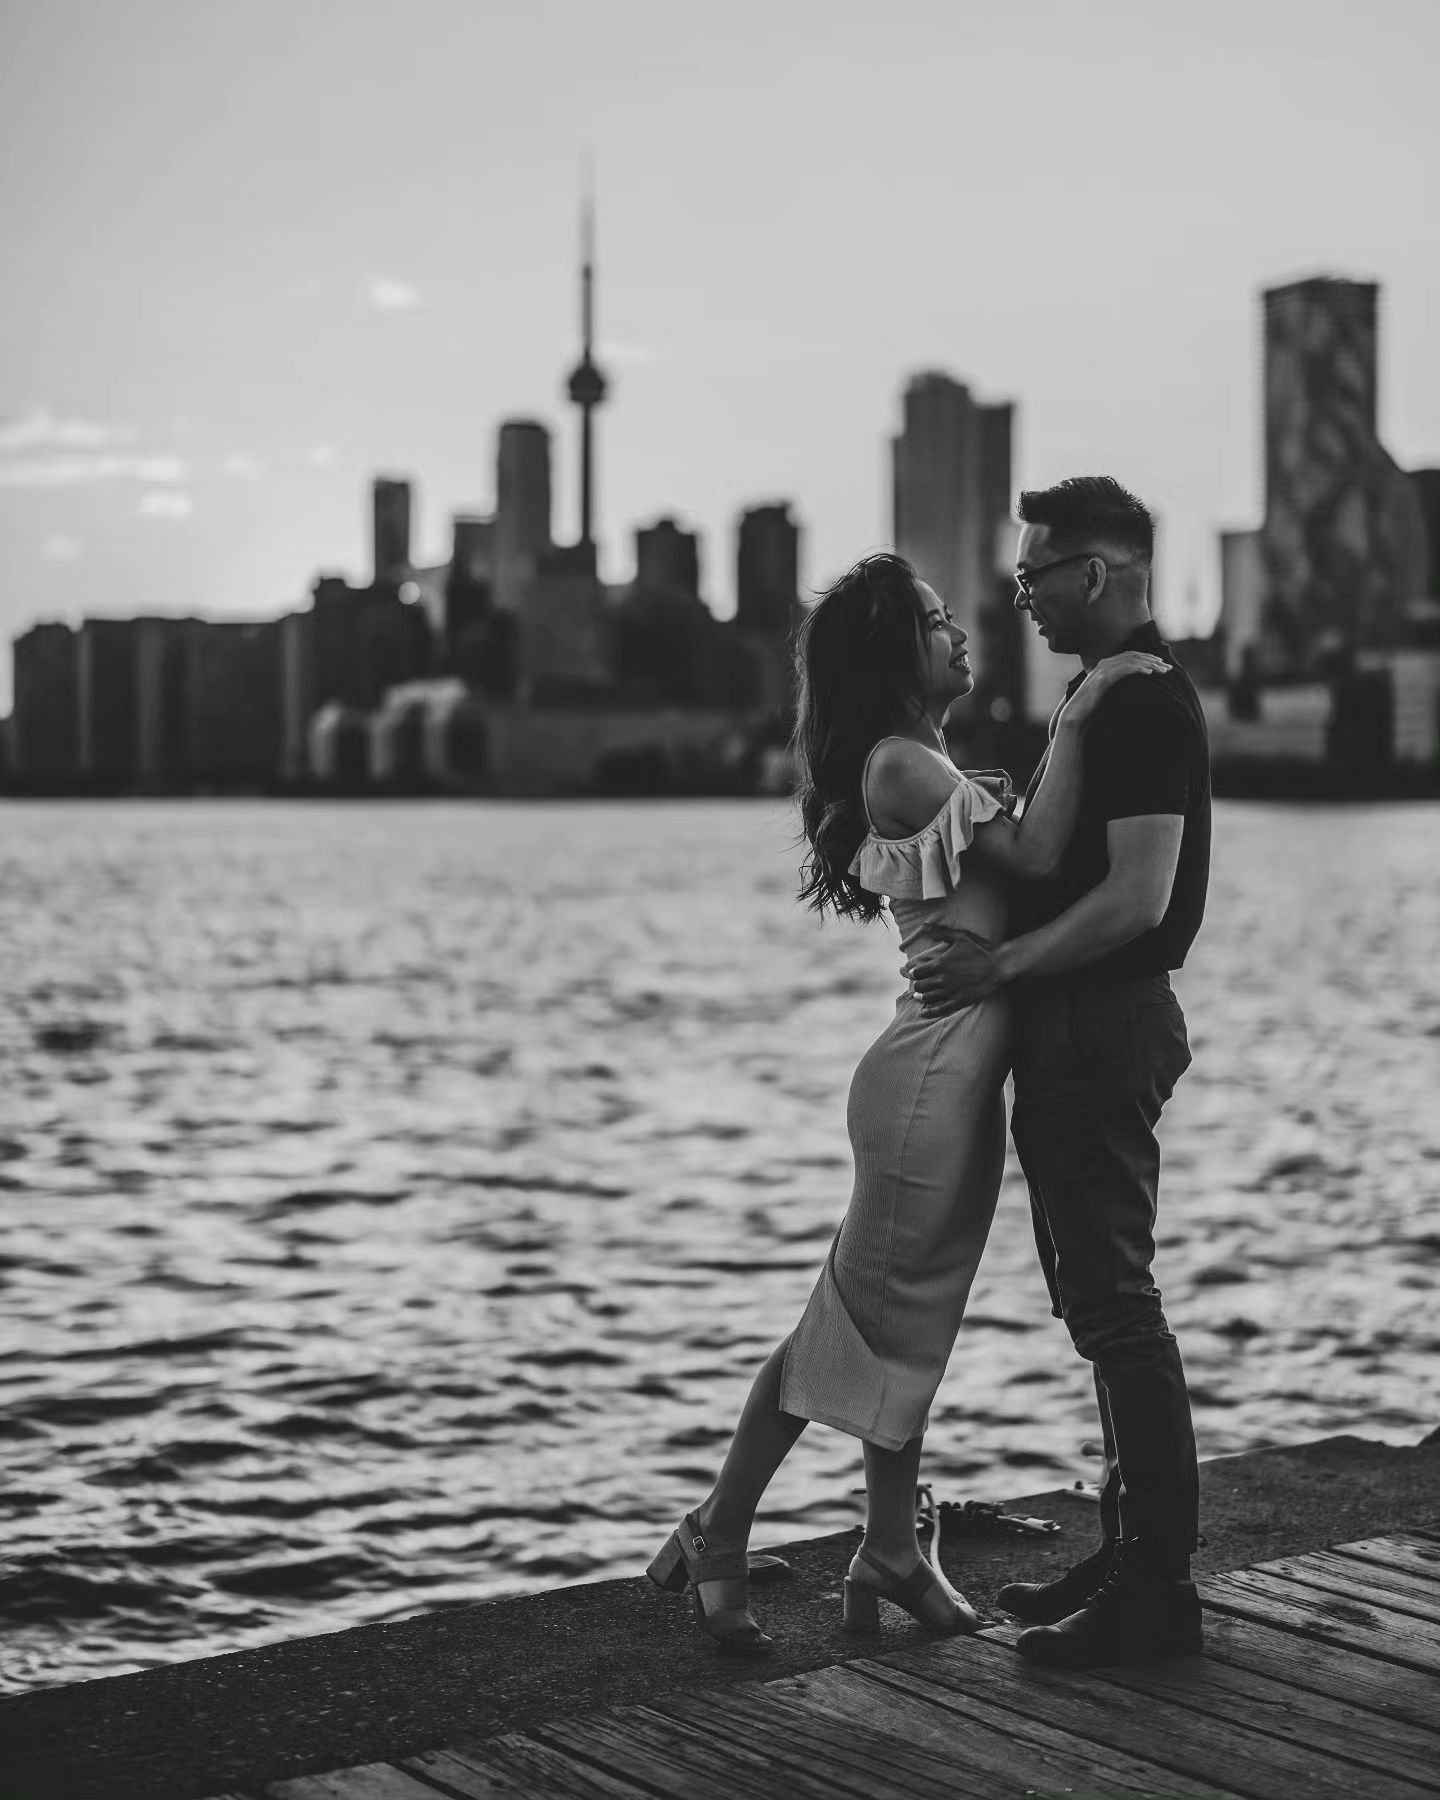 Oh Toronto
.
.
.
.
.
#oakvilleweddingphotographer #burlingtonweddingphotographer #oakvilleweddingphotographer #pickeringweddingphotographer #weddingmoments #mississaugaweddingphotographer #bramptonweddingphotographer #torontowedding
#northyorkwedding